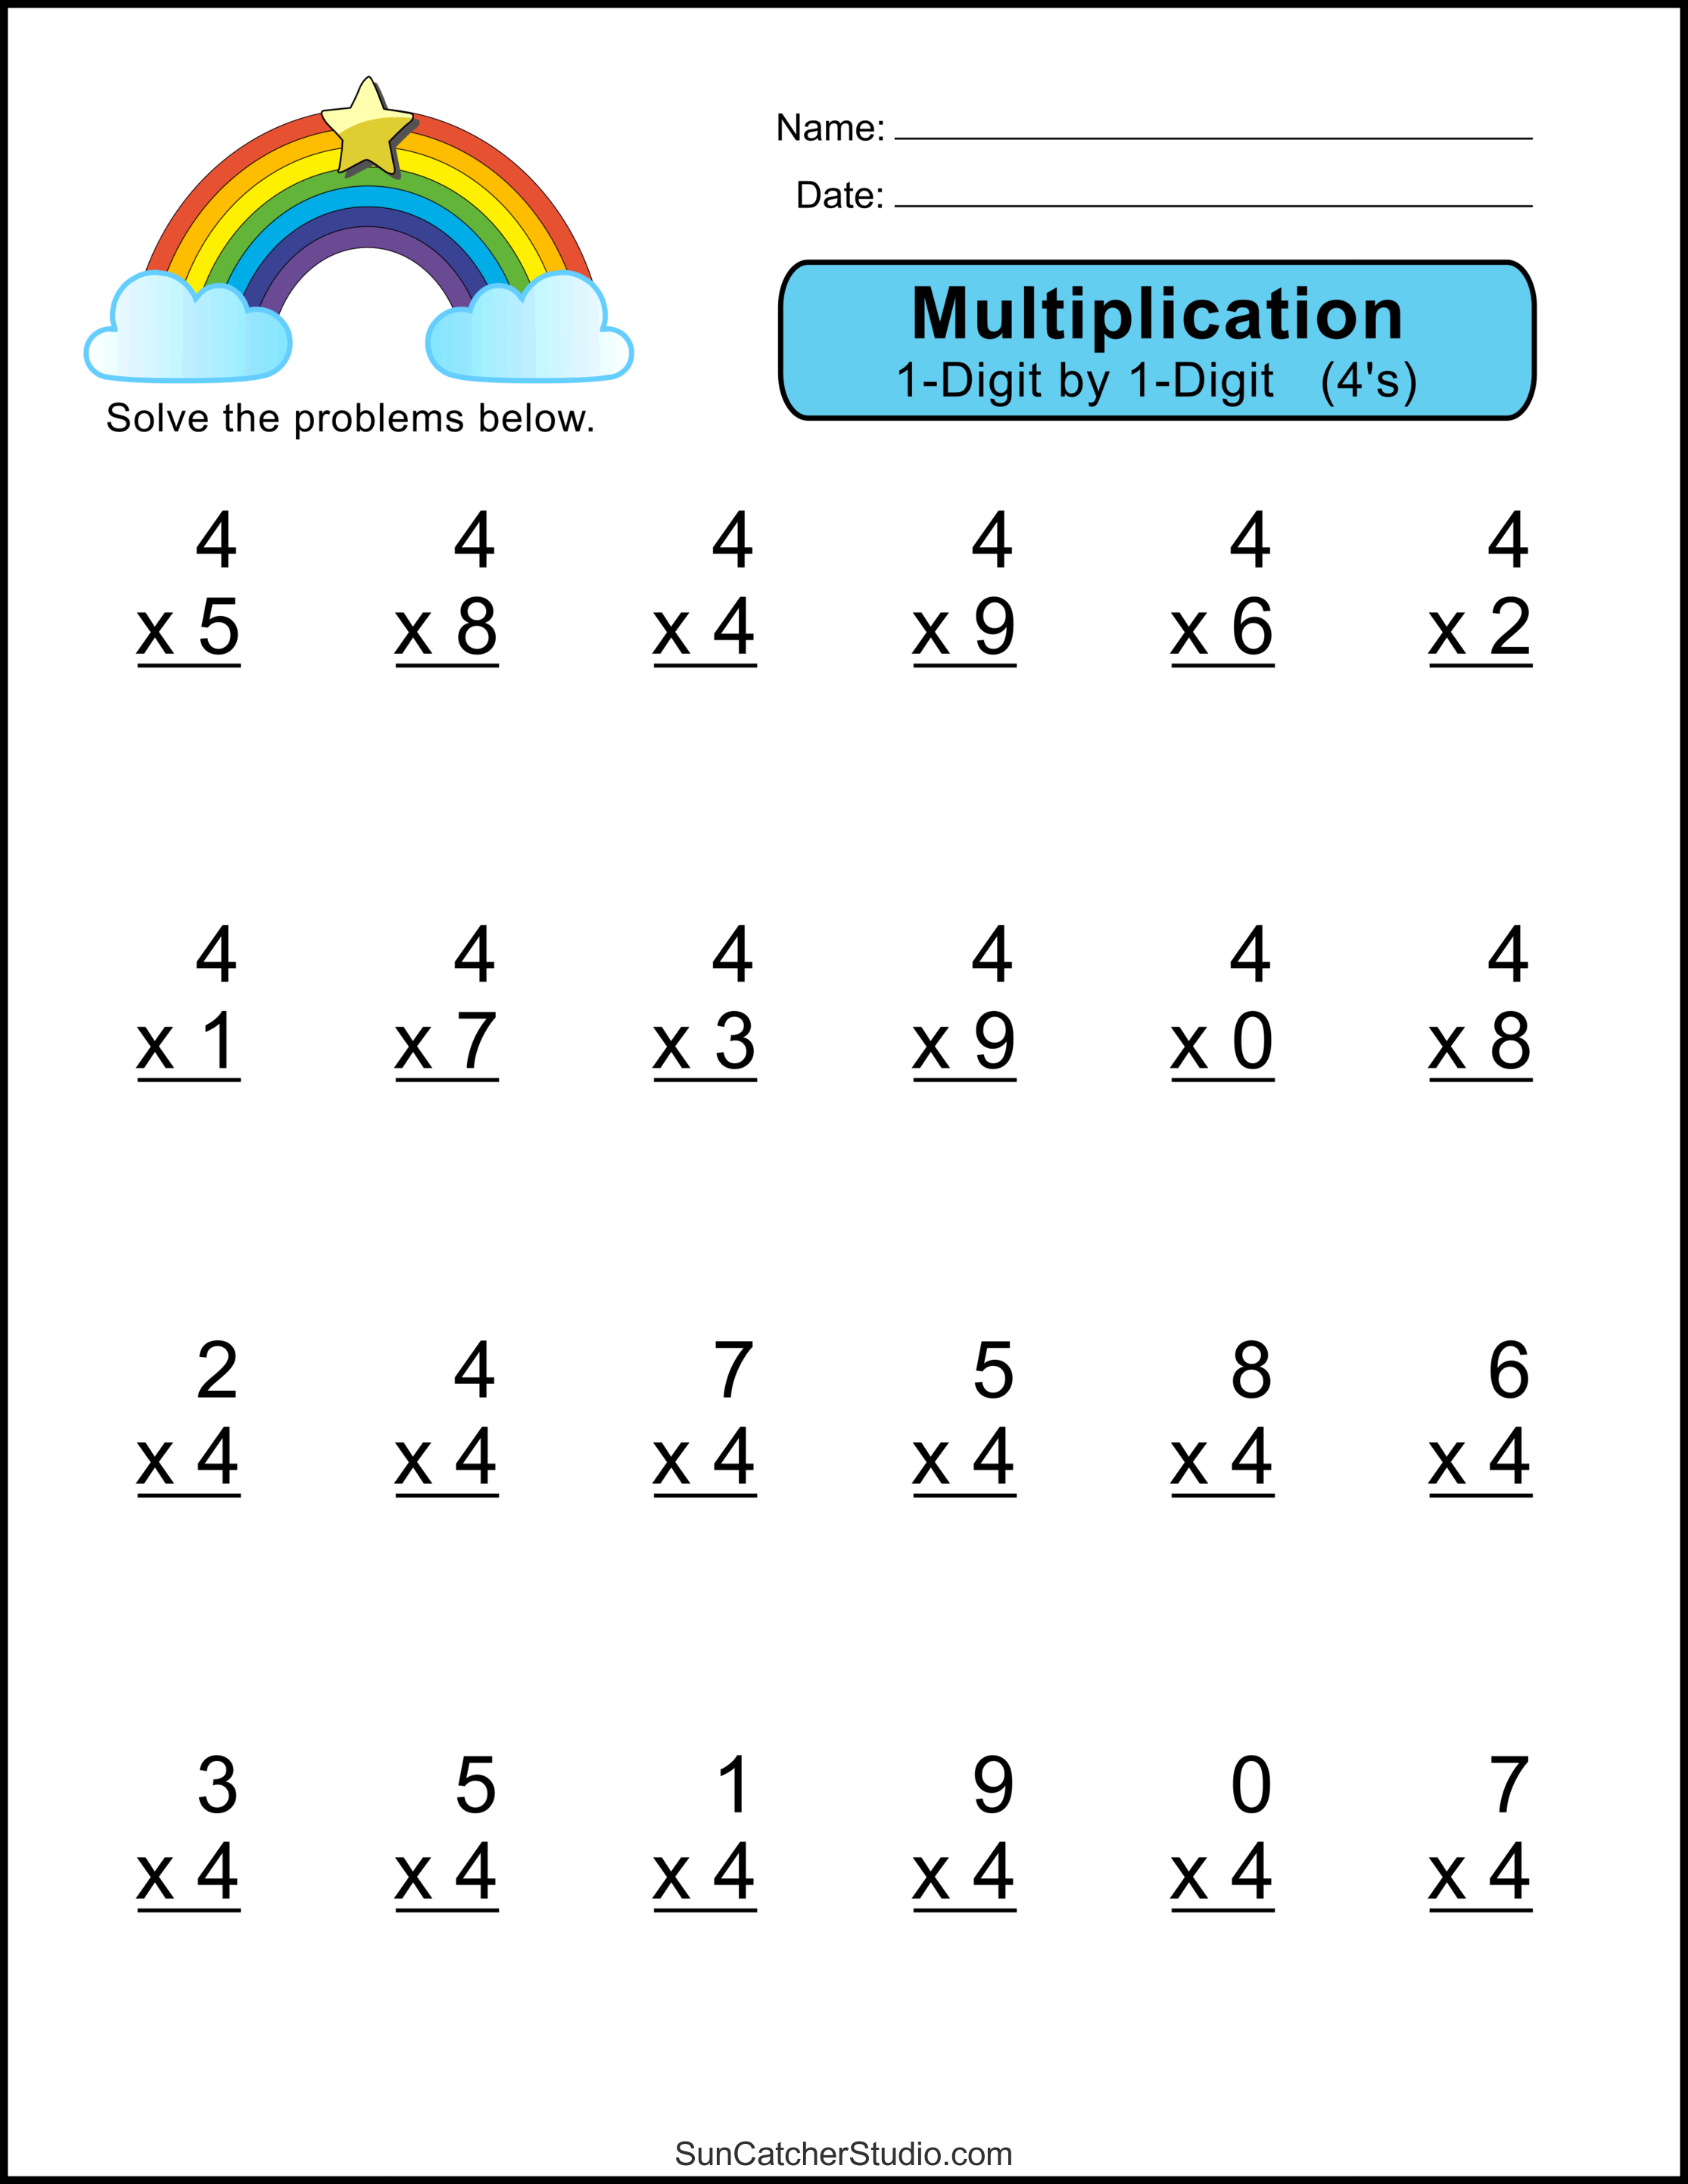 Multiplication Fact Worksheets Pdf